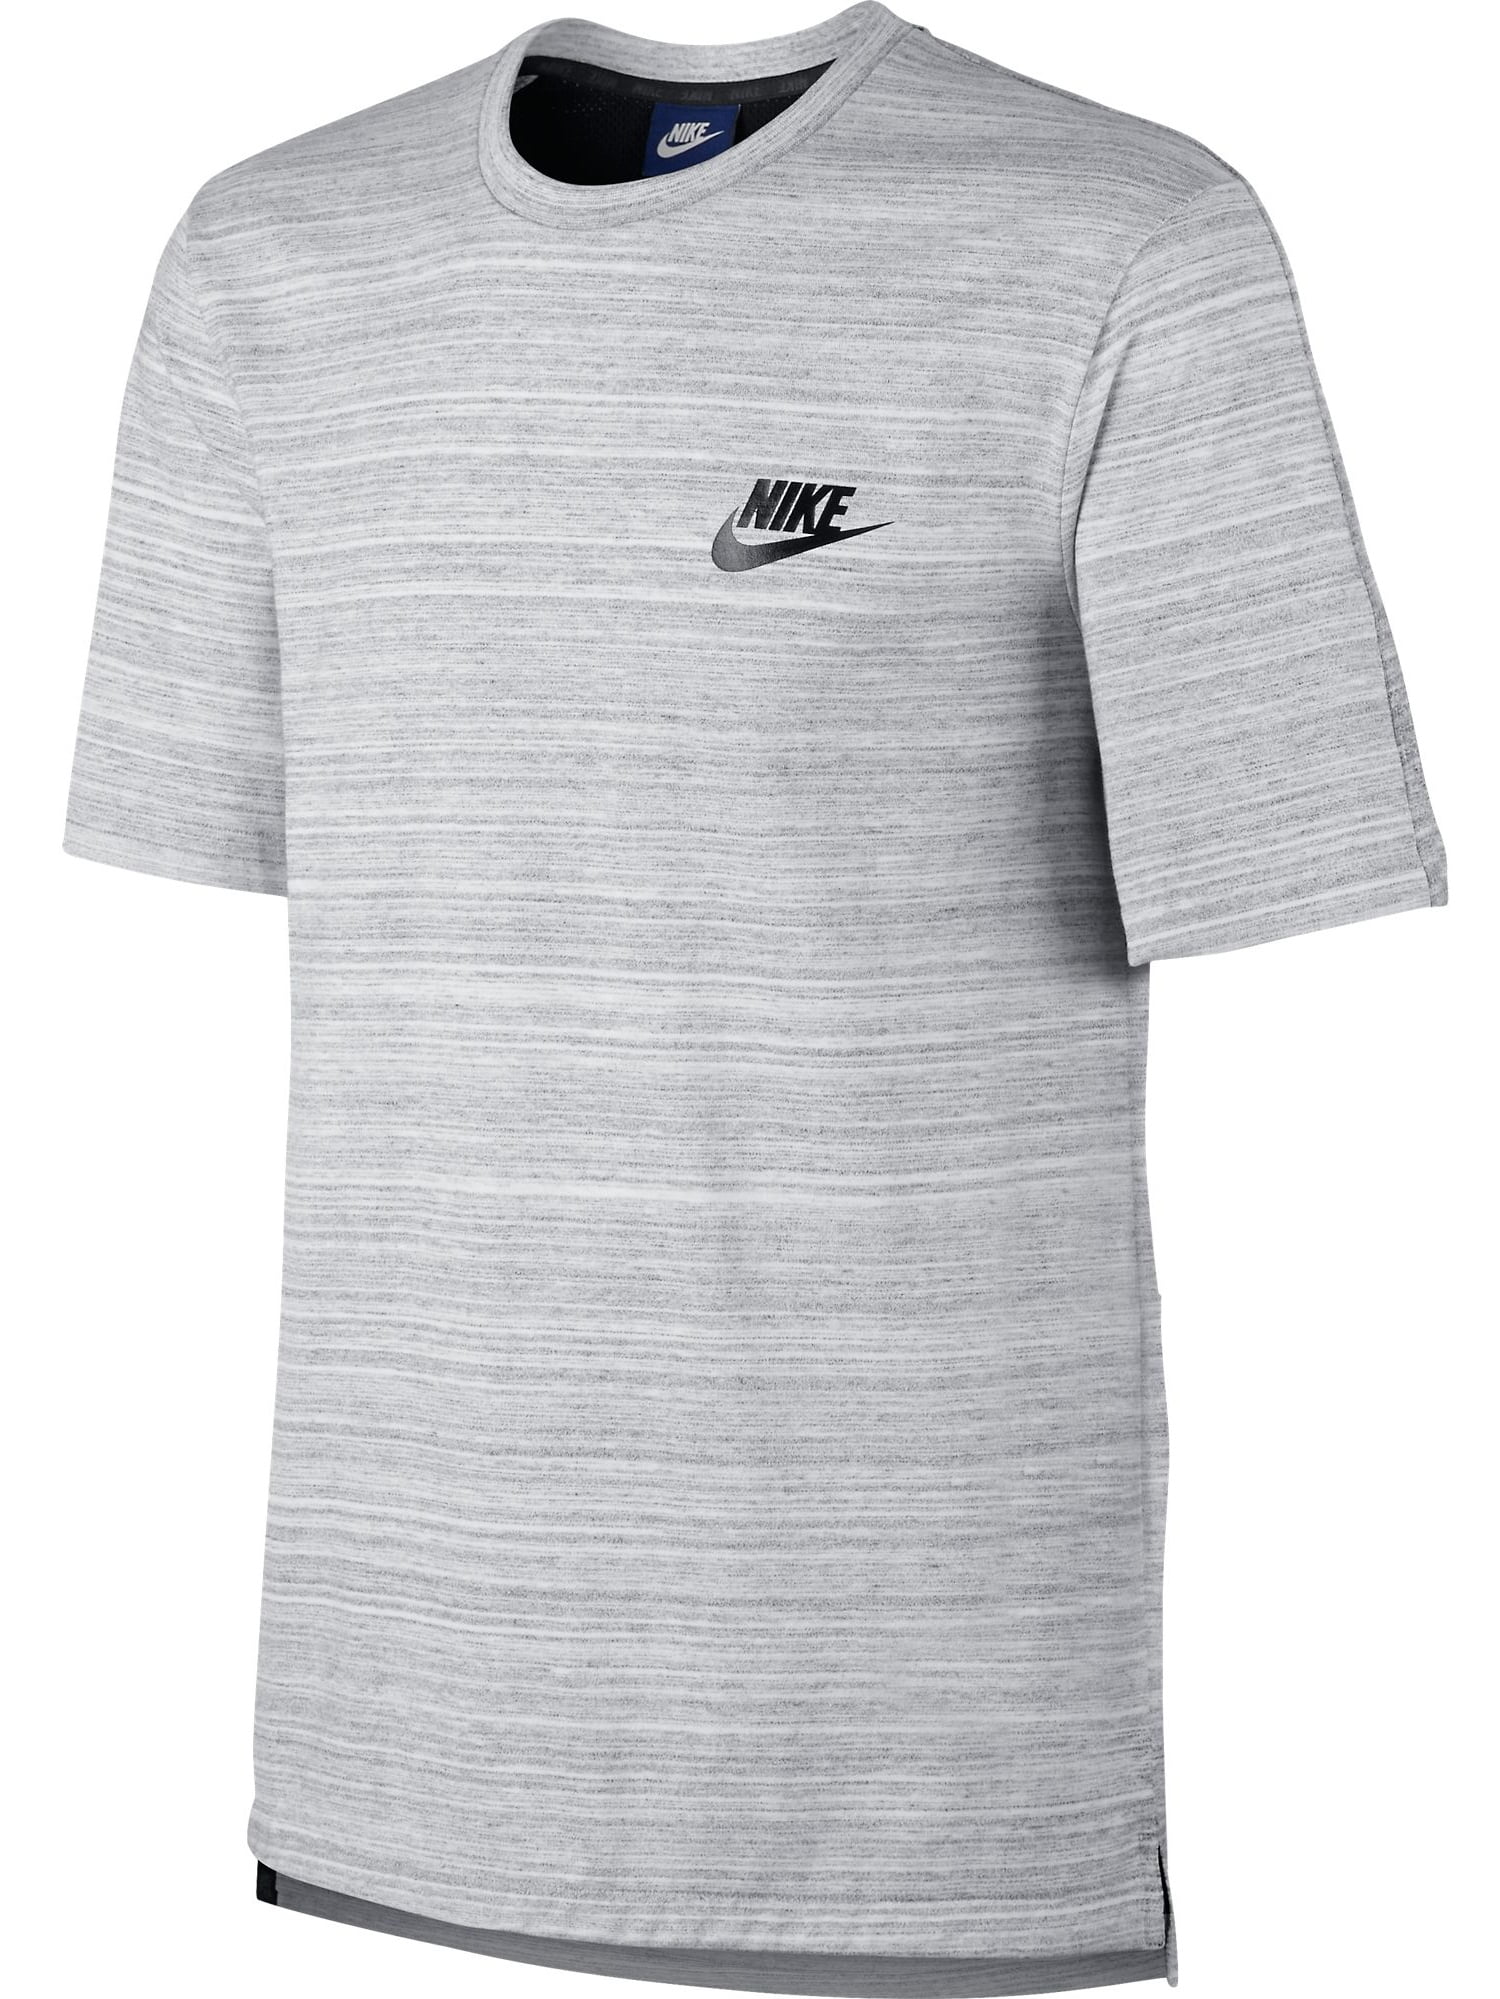 Nike Sportswear Advance 15 Men's T-Shirt White/Heather/Black 837010-100 ...